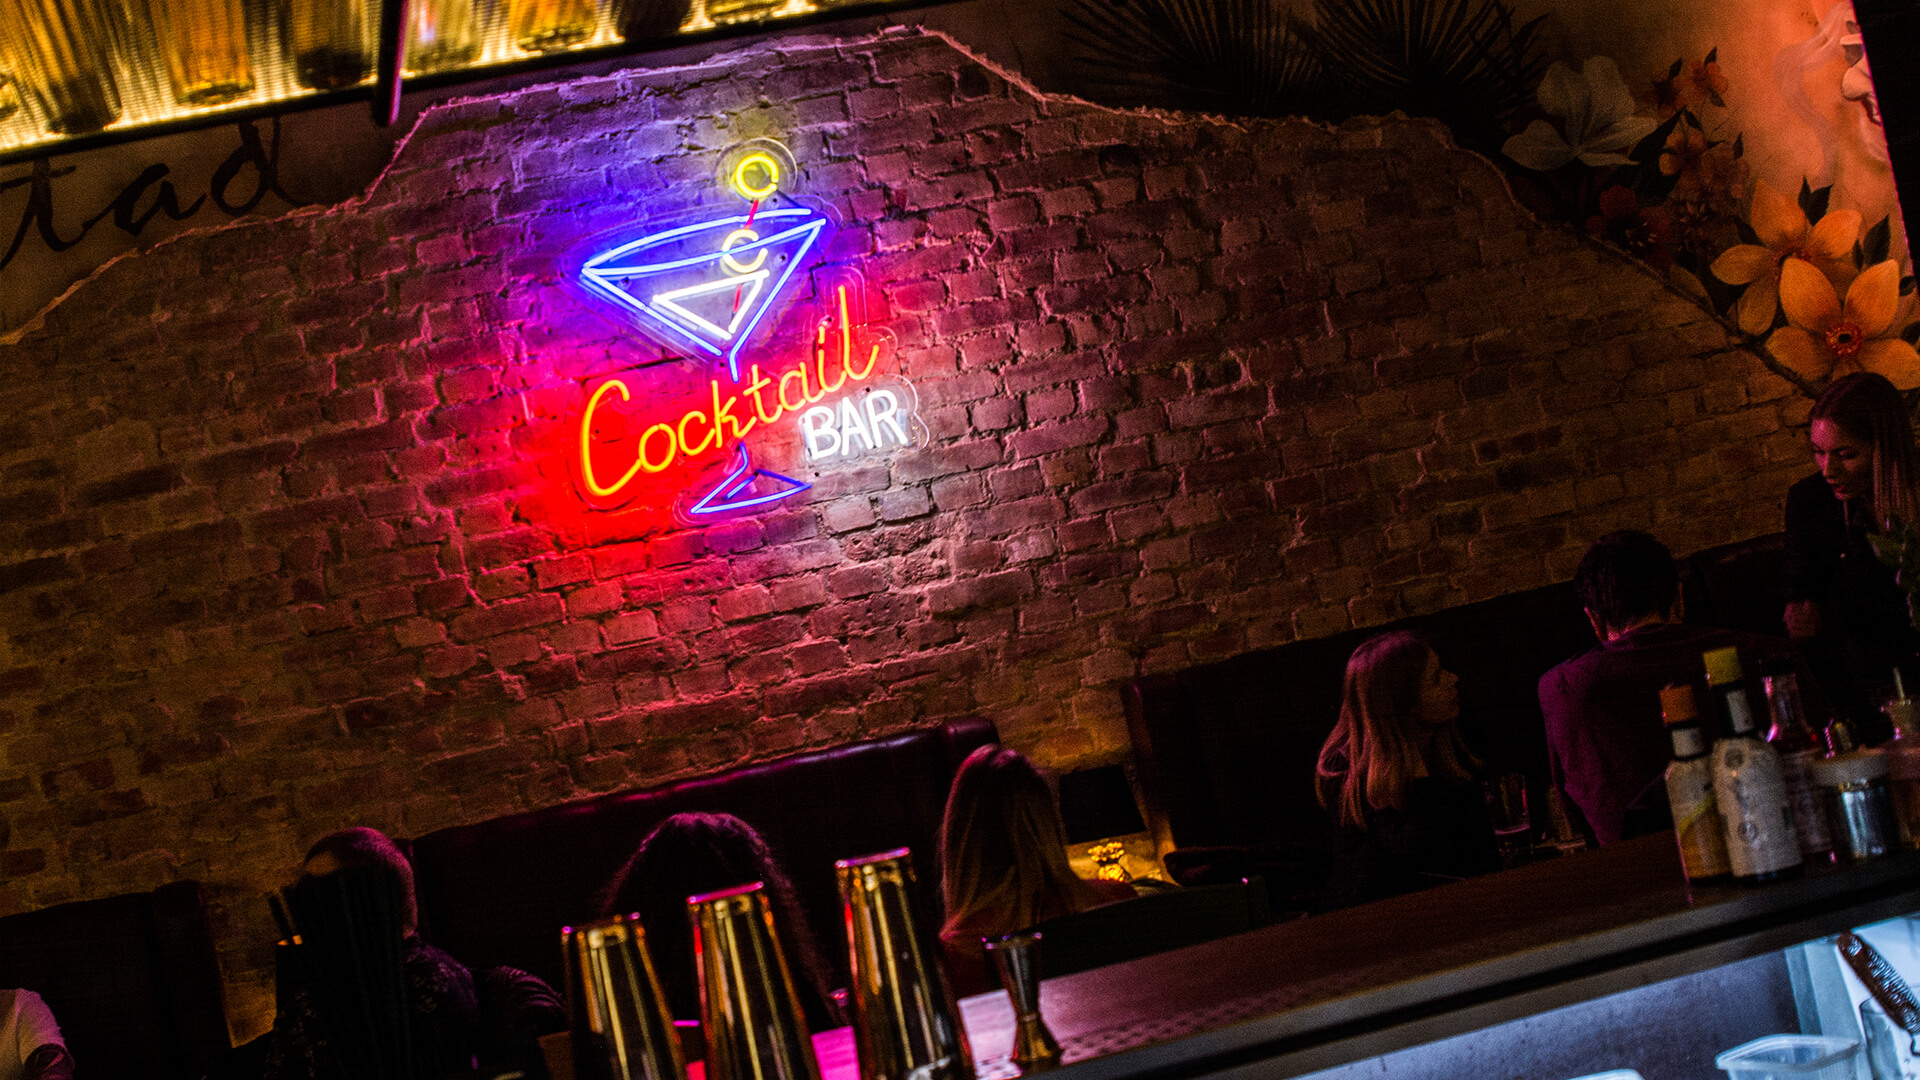 cuba libre Kuba glas cocktailbar cocktail bar cocktail - cuba-libre-neon-glas-an-der-wand-mit-ziegel-im-restaurant-coctail-bar-neon-farbe-an-der-wand-über-tischen-neon-bestellen-beleuchtetes-glas-poznan